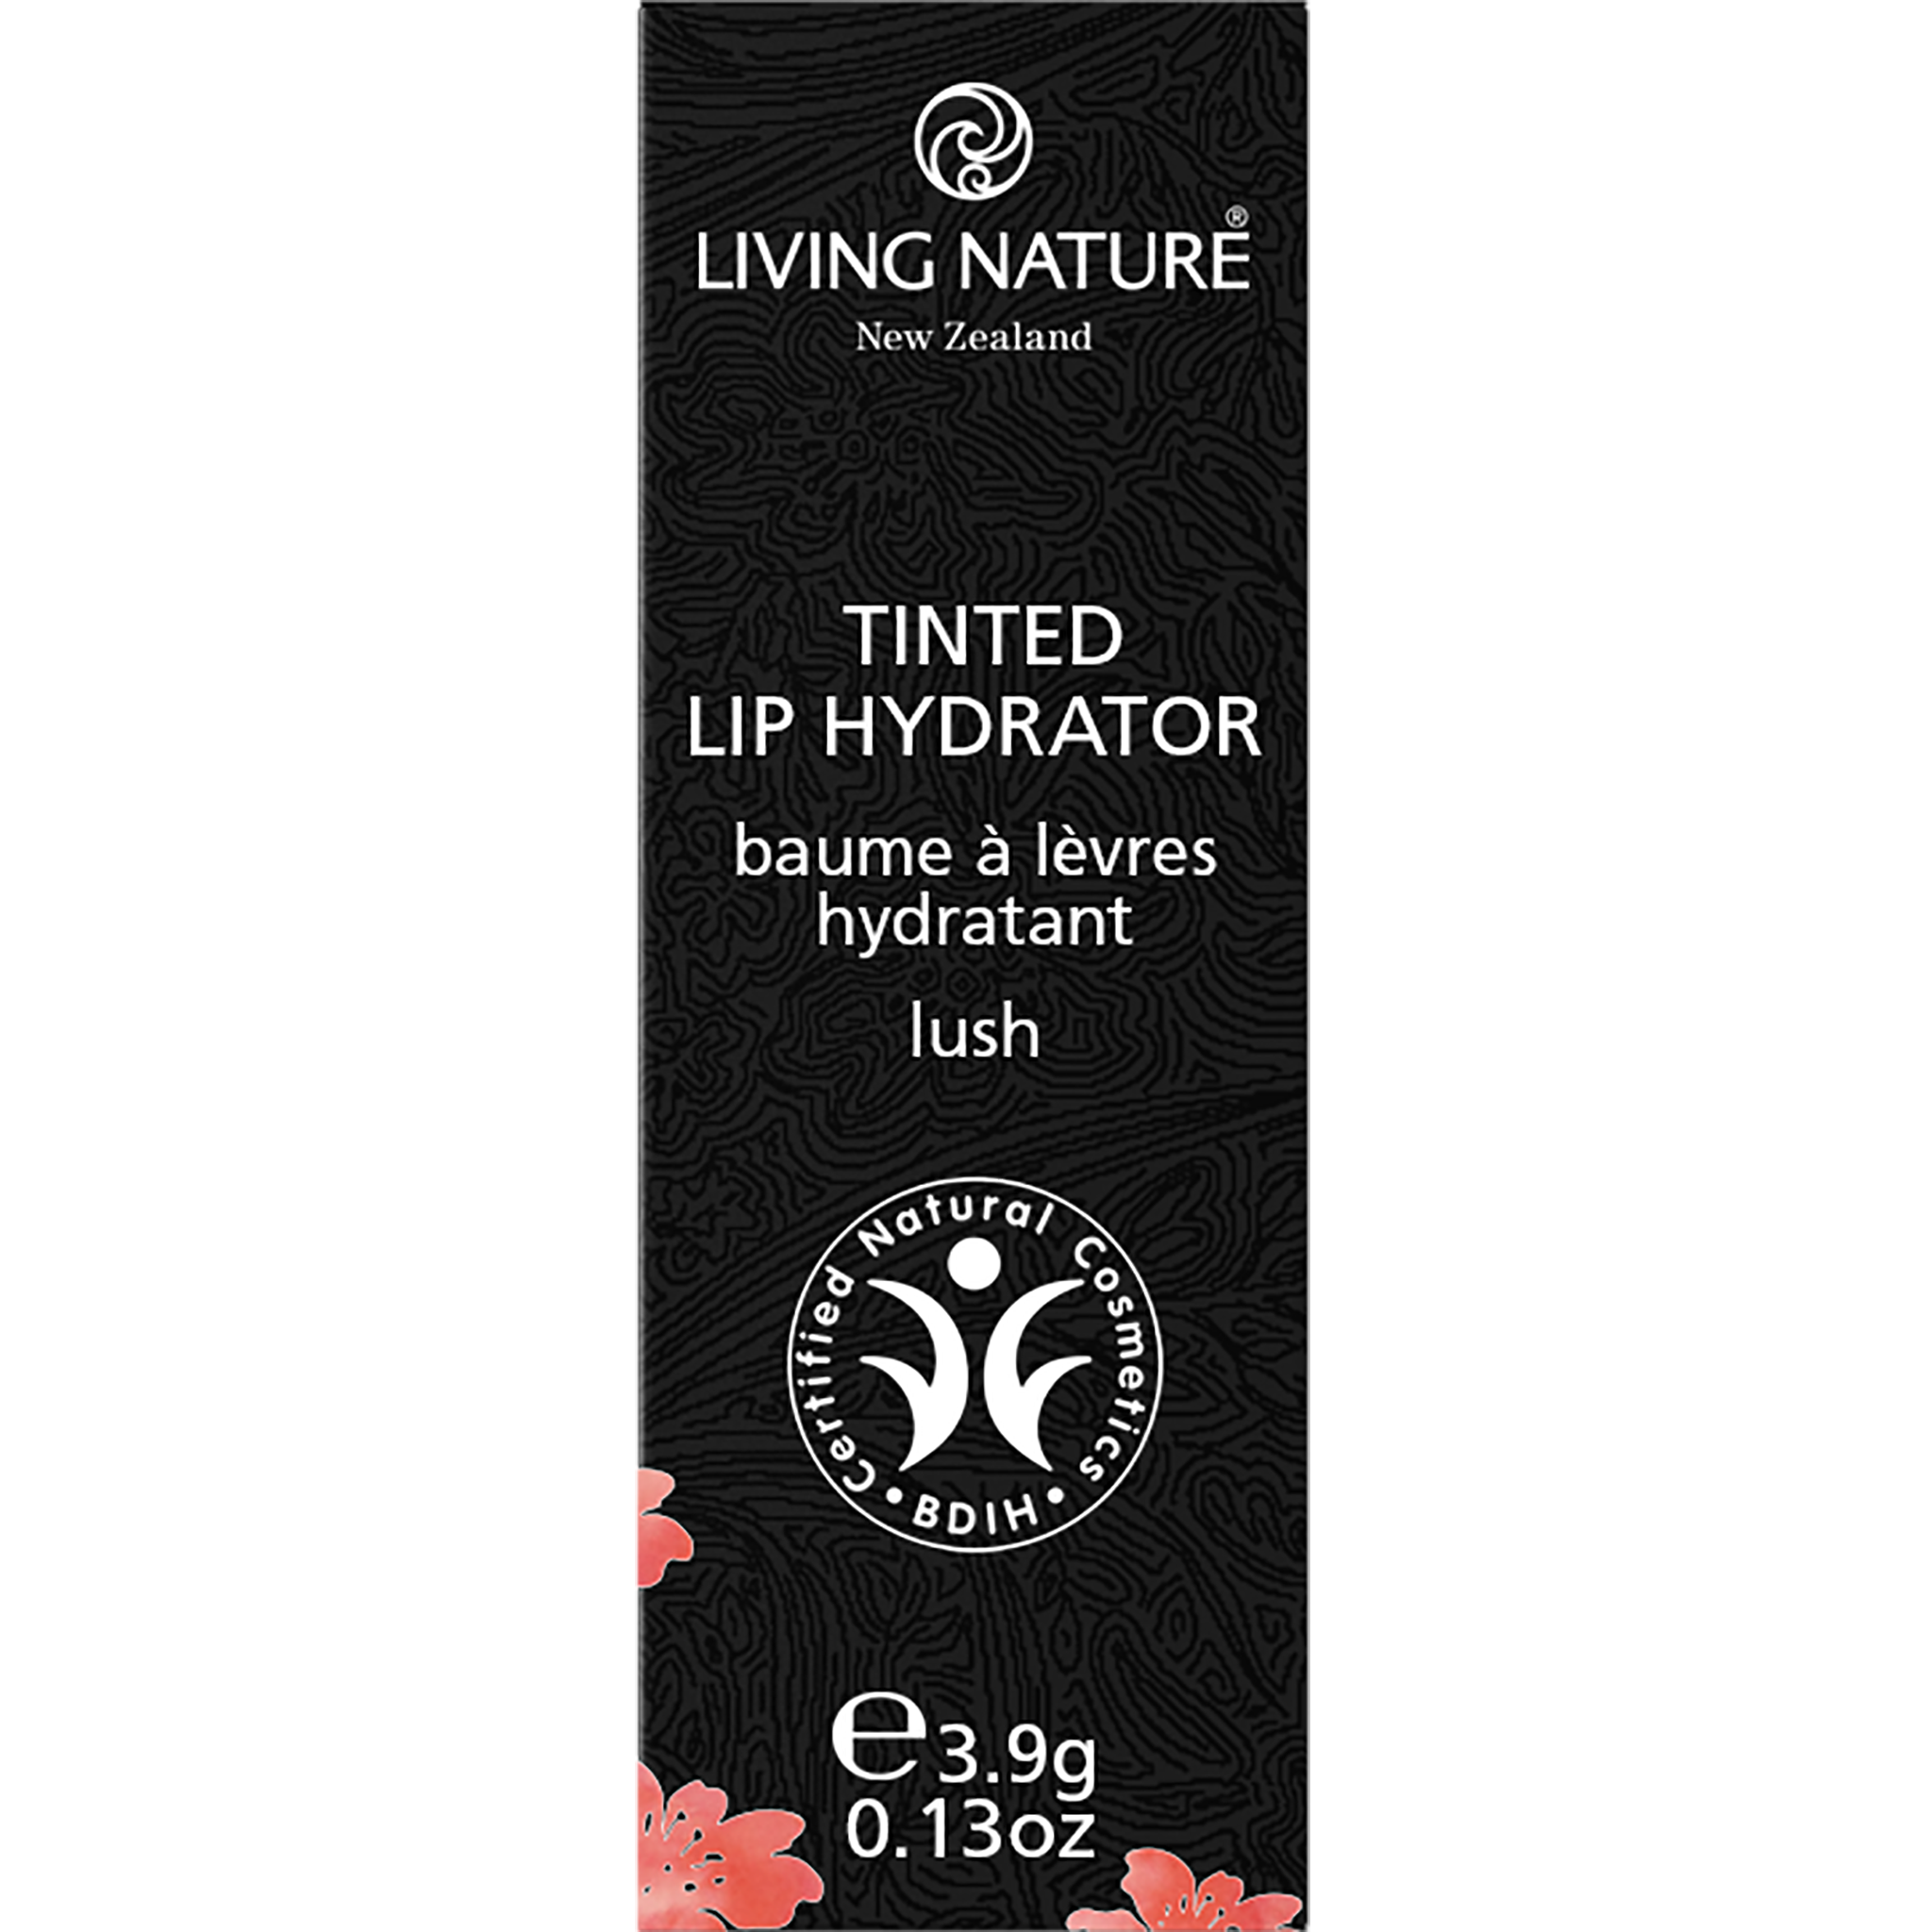 Lush Tinted Lip Hydrator